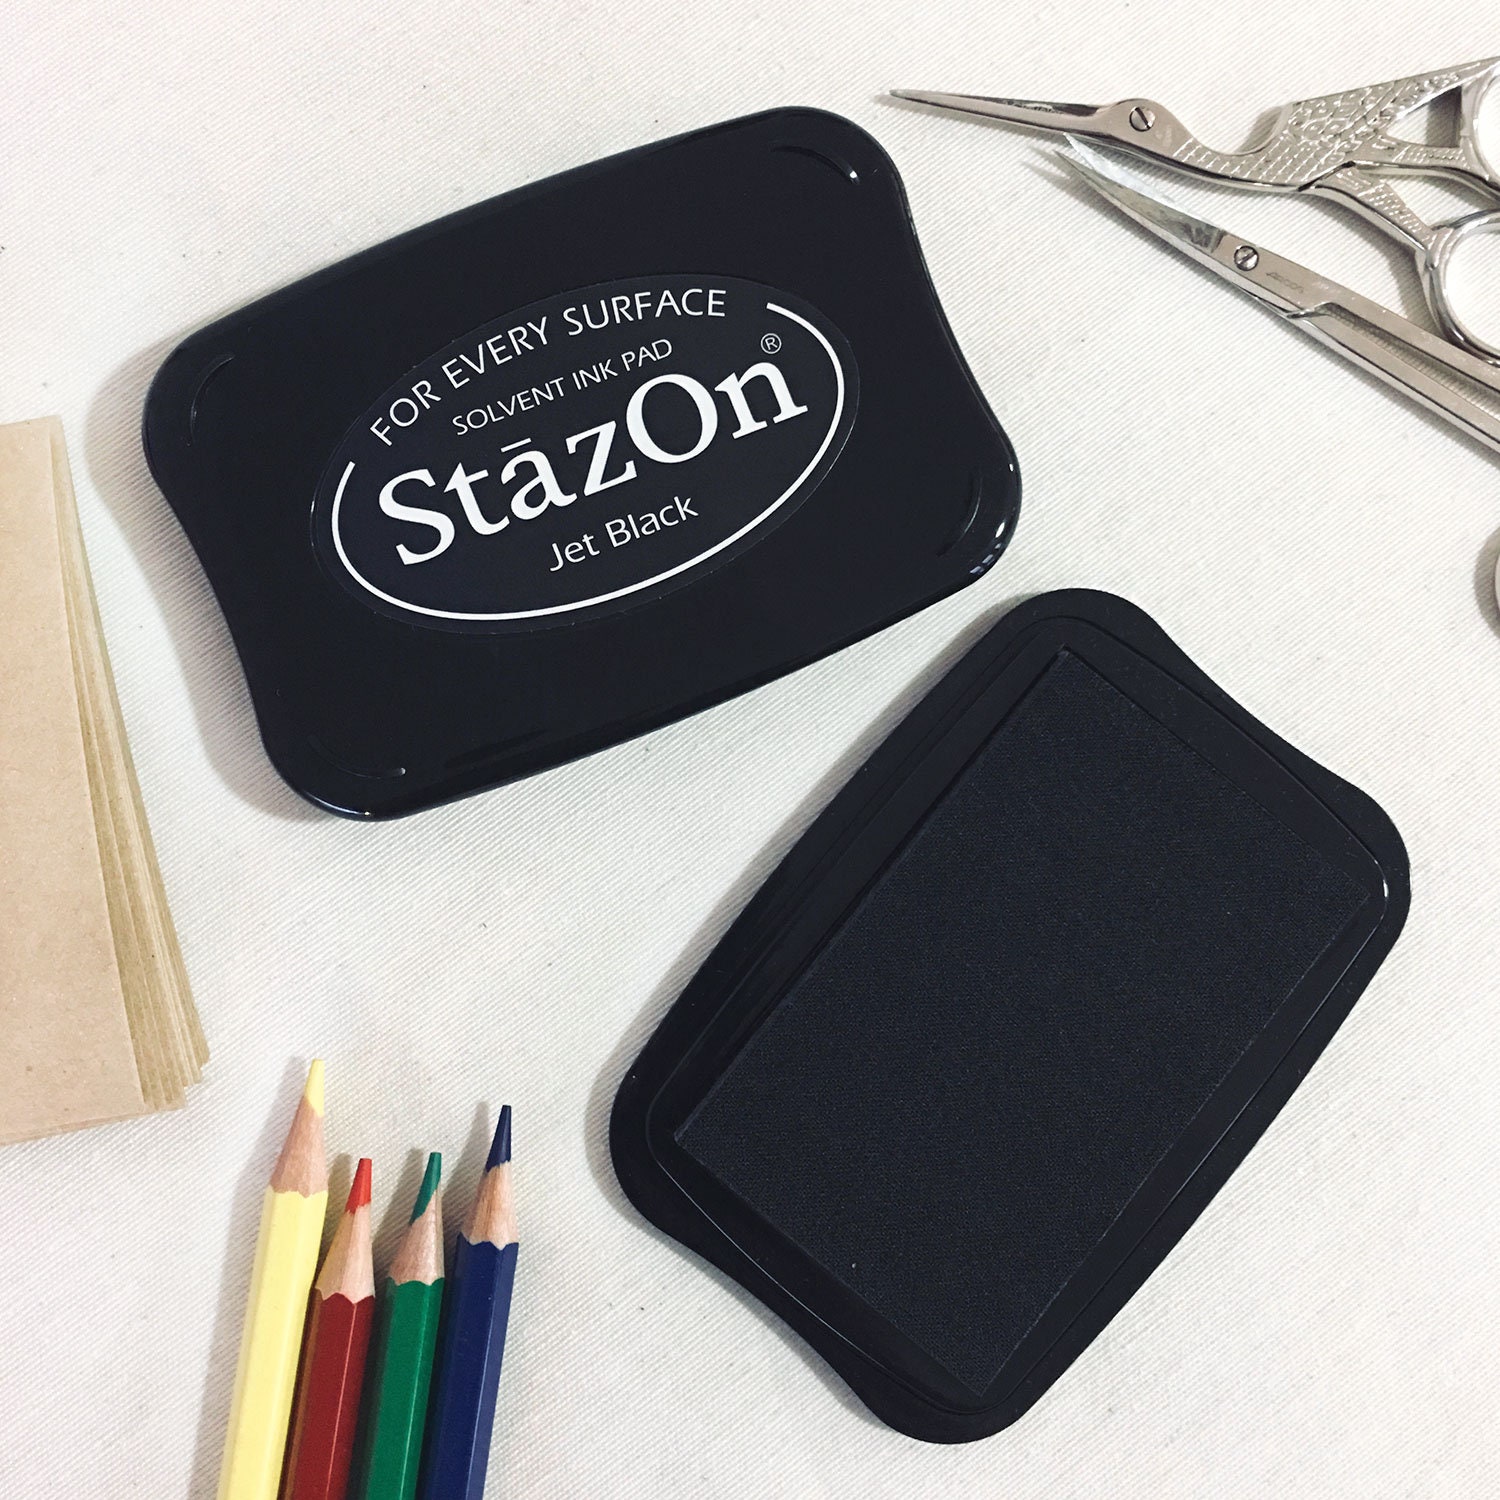 StazOn® Jet Black Solvent Ink Pad